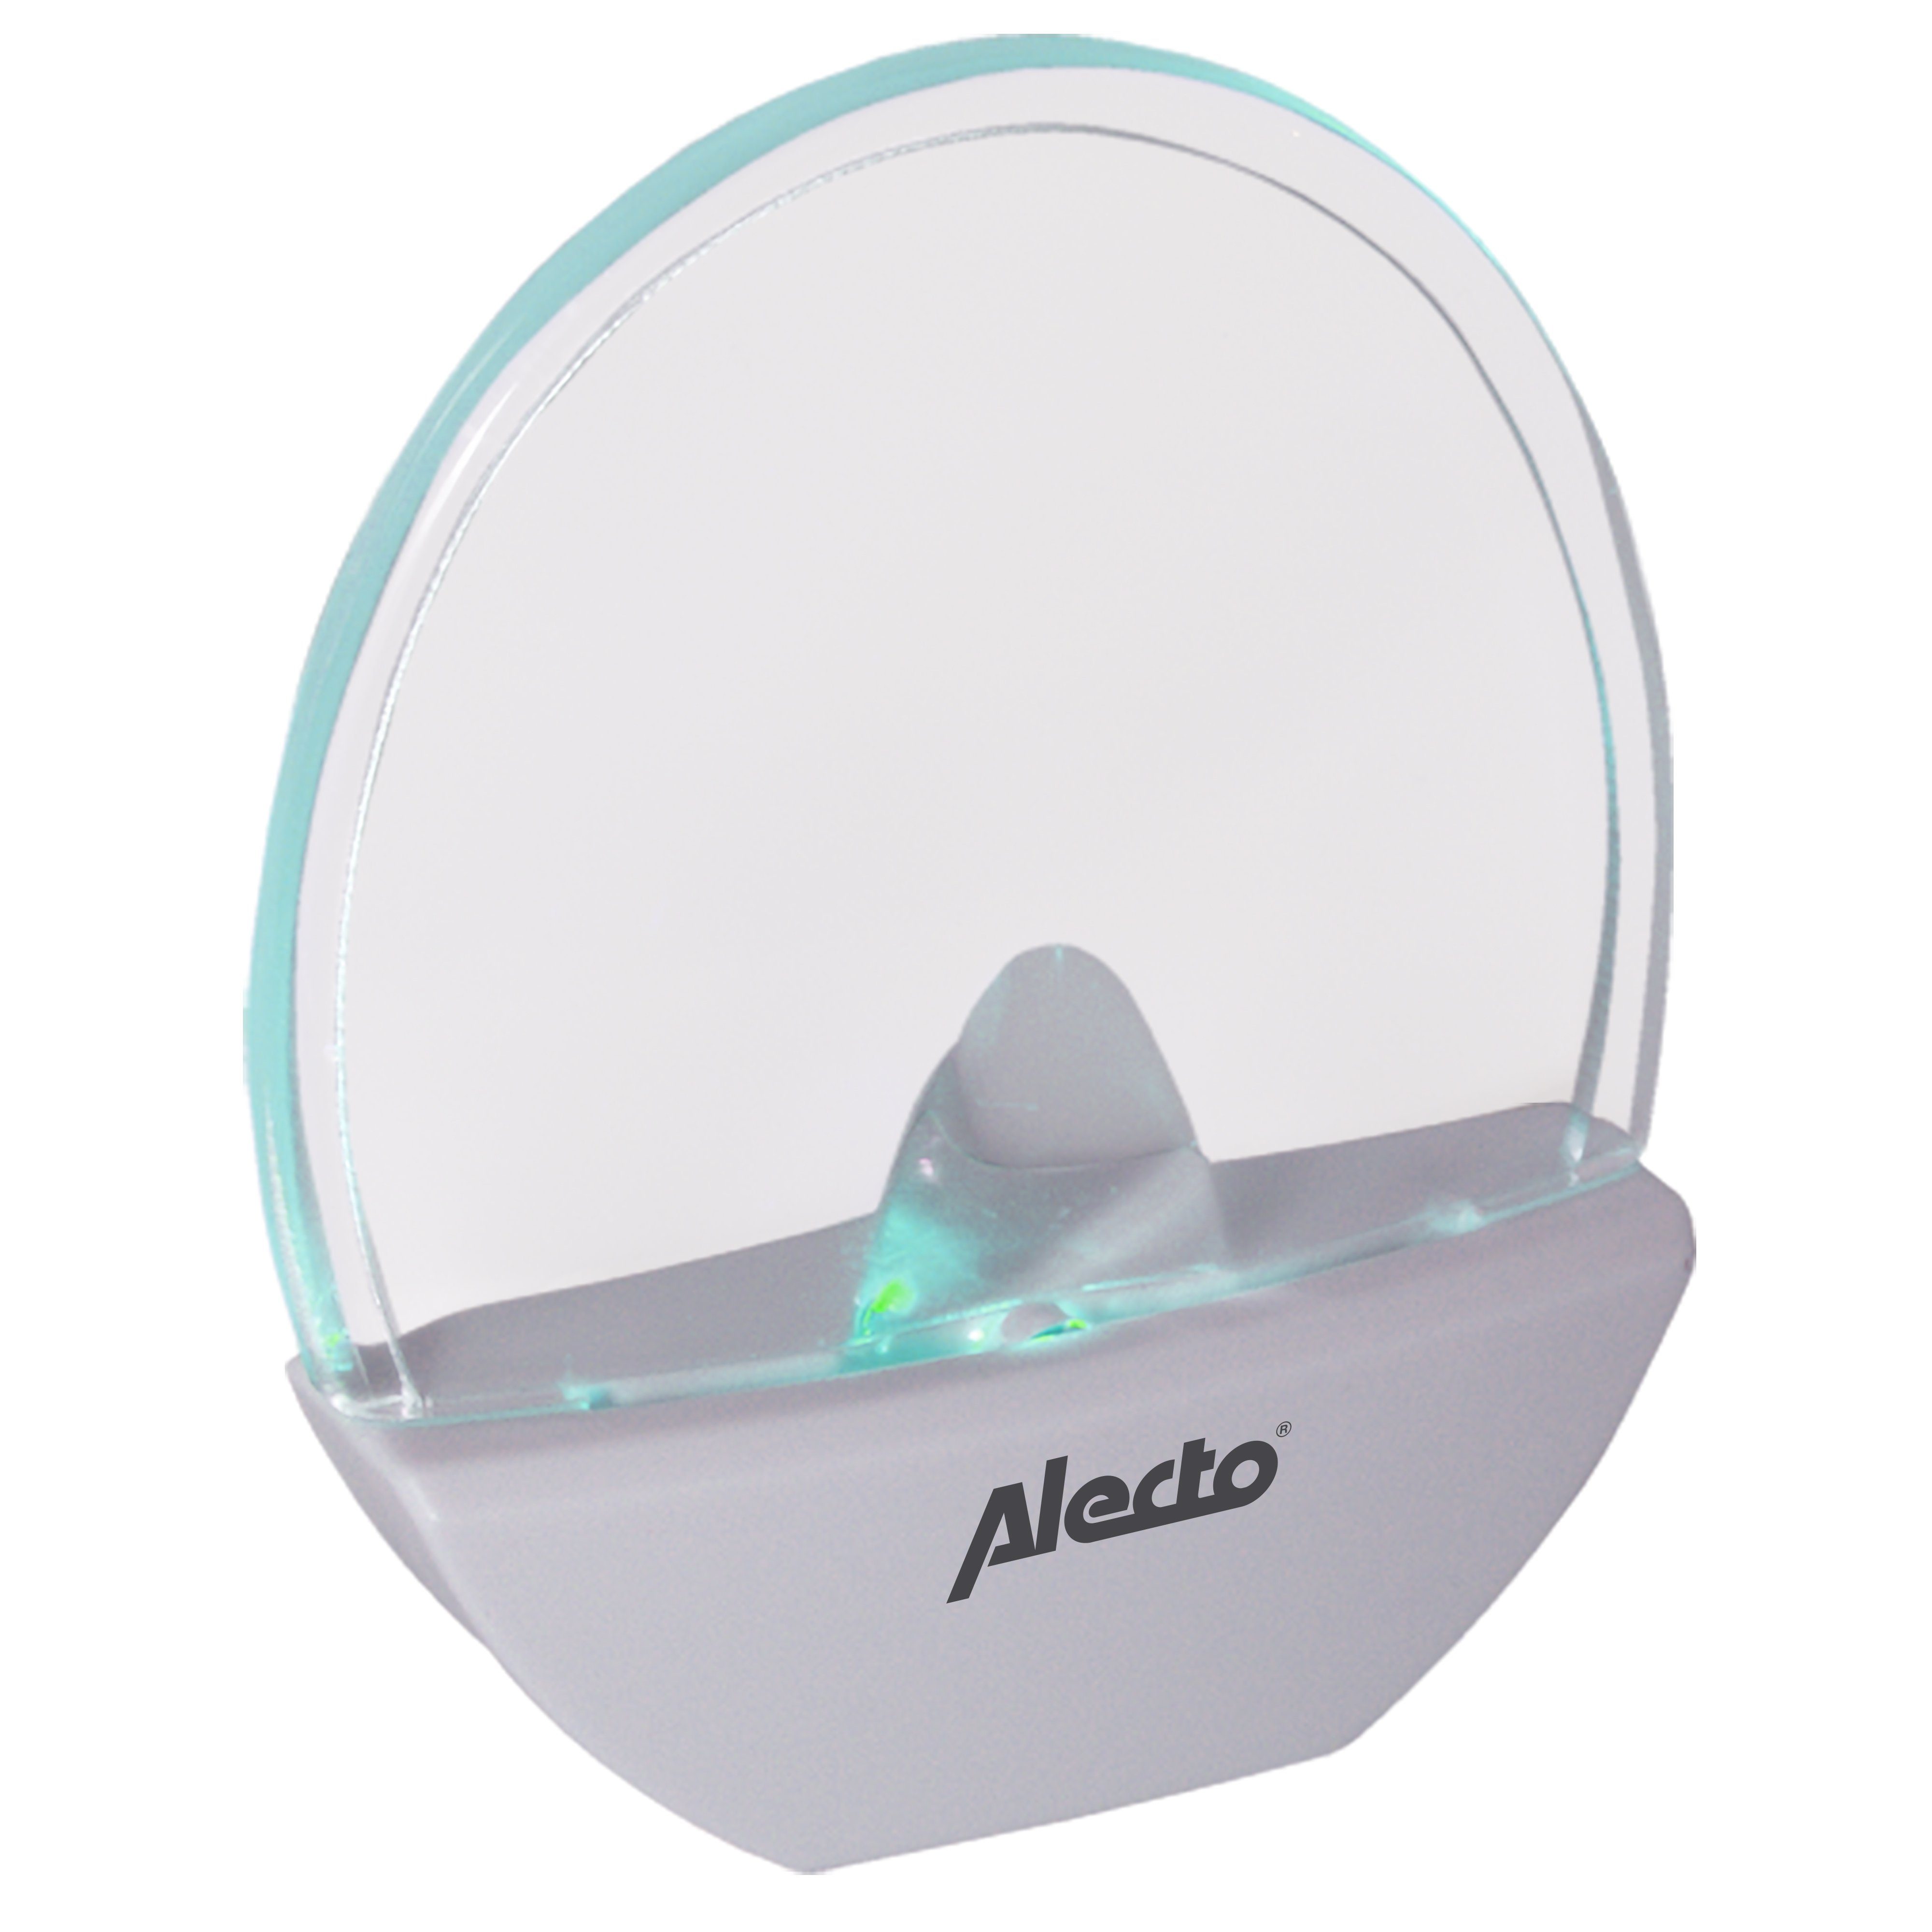 Alecto LED Nachtlicht ANV-18, Beruhigendes blaues LED-Licht